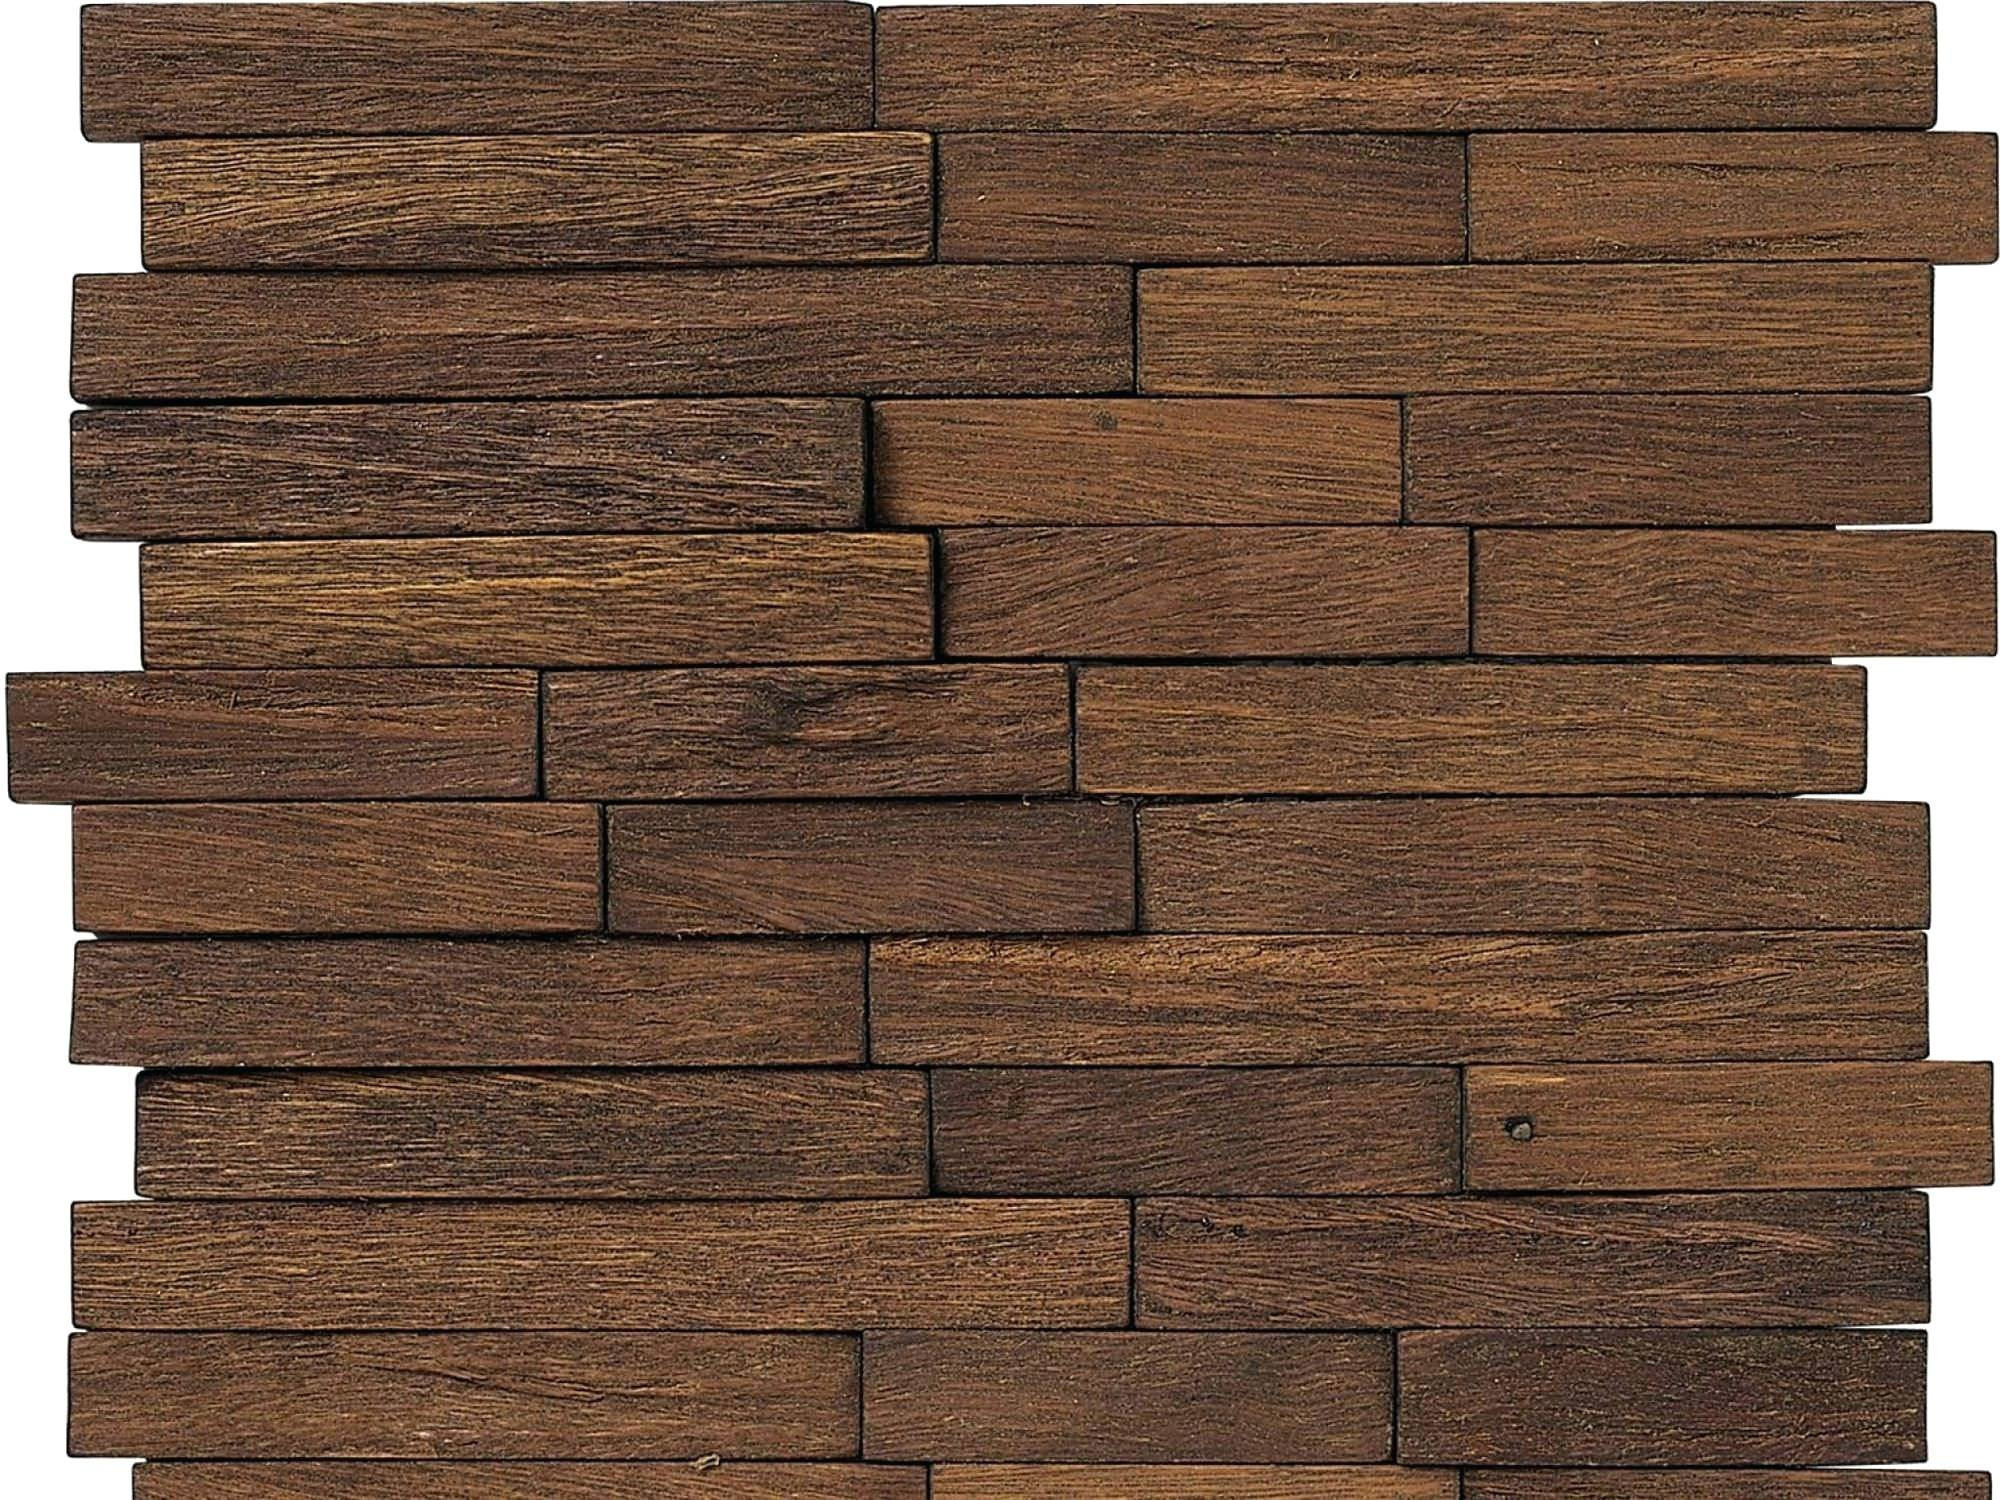 layout for hardwood floor install of the wood maker page 2 wood wallpaper regarding floor patterns new metal wall art panels fresh 1 kirkland wall decor home design 0d ideas of wood